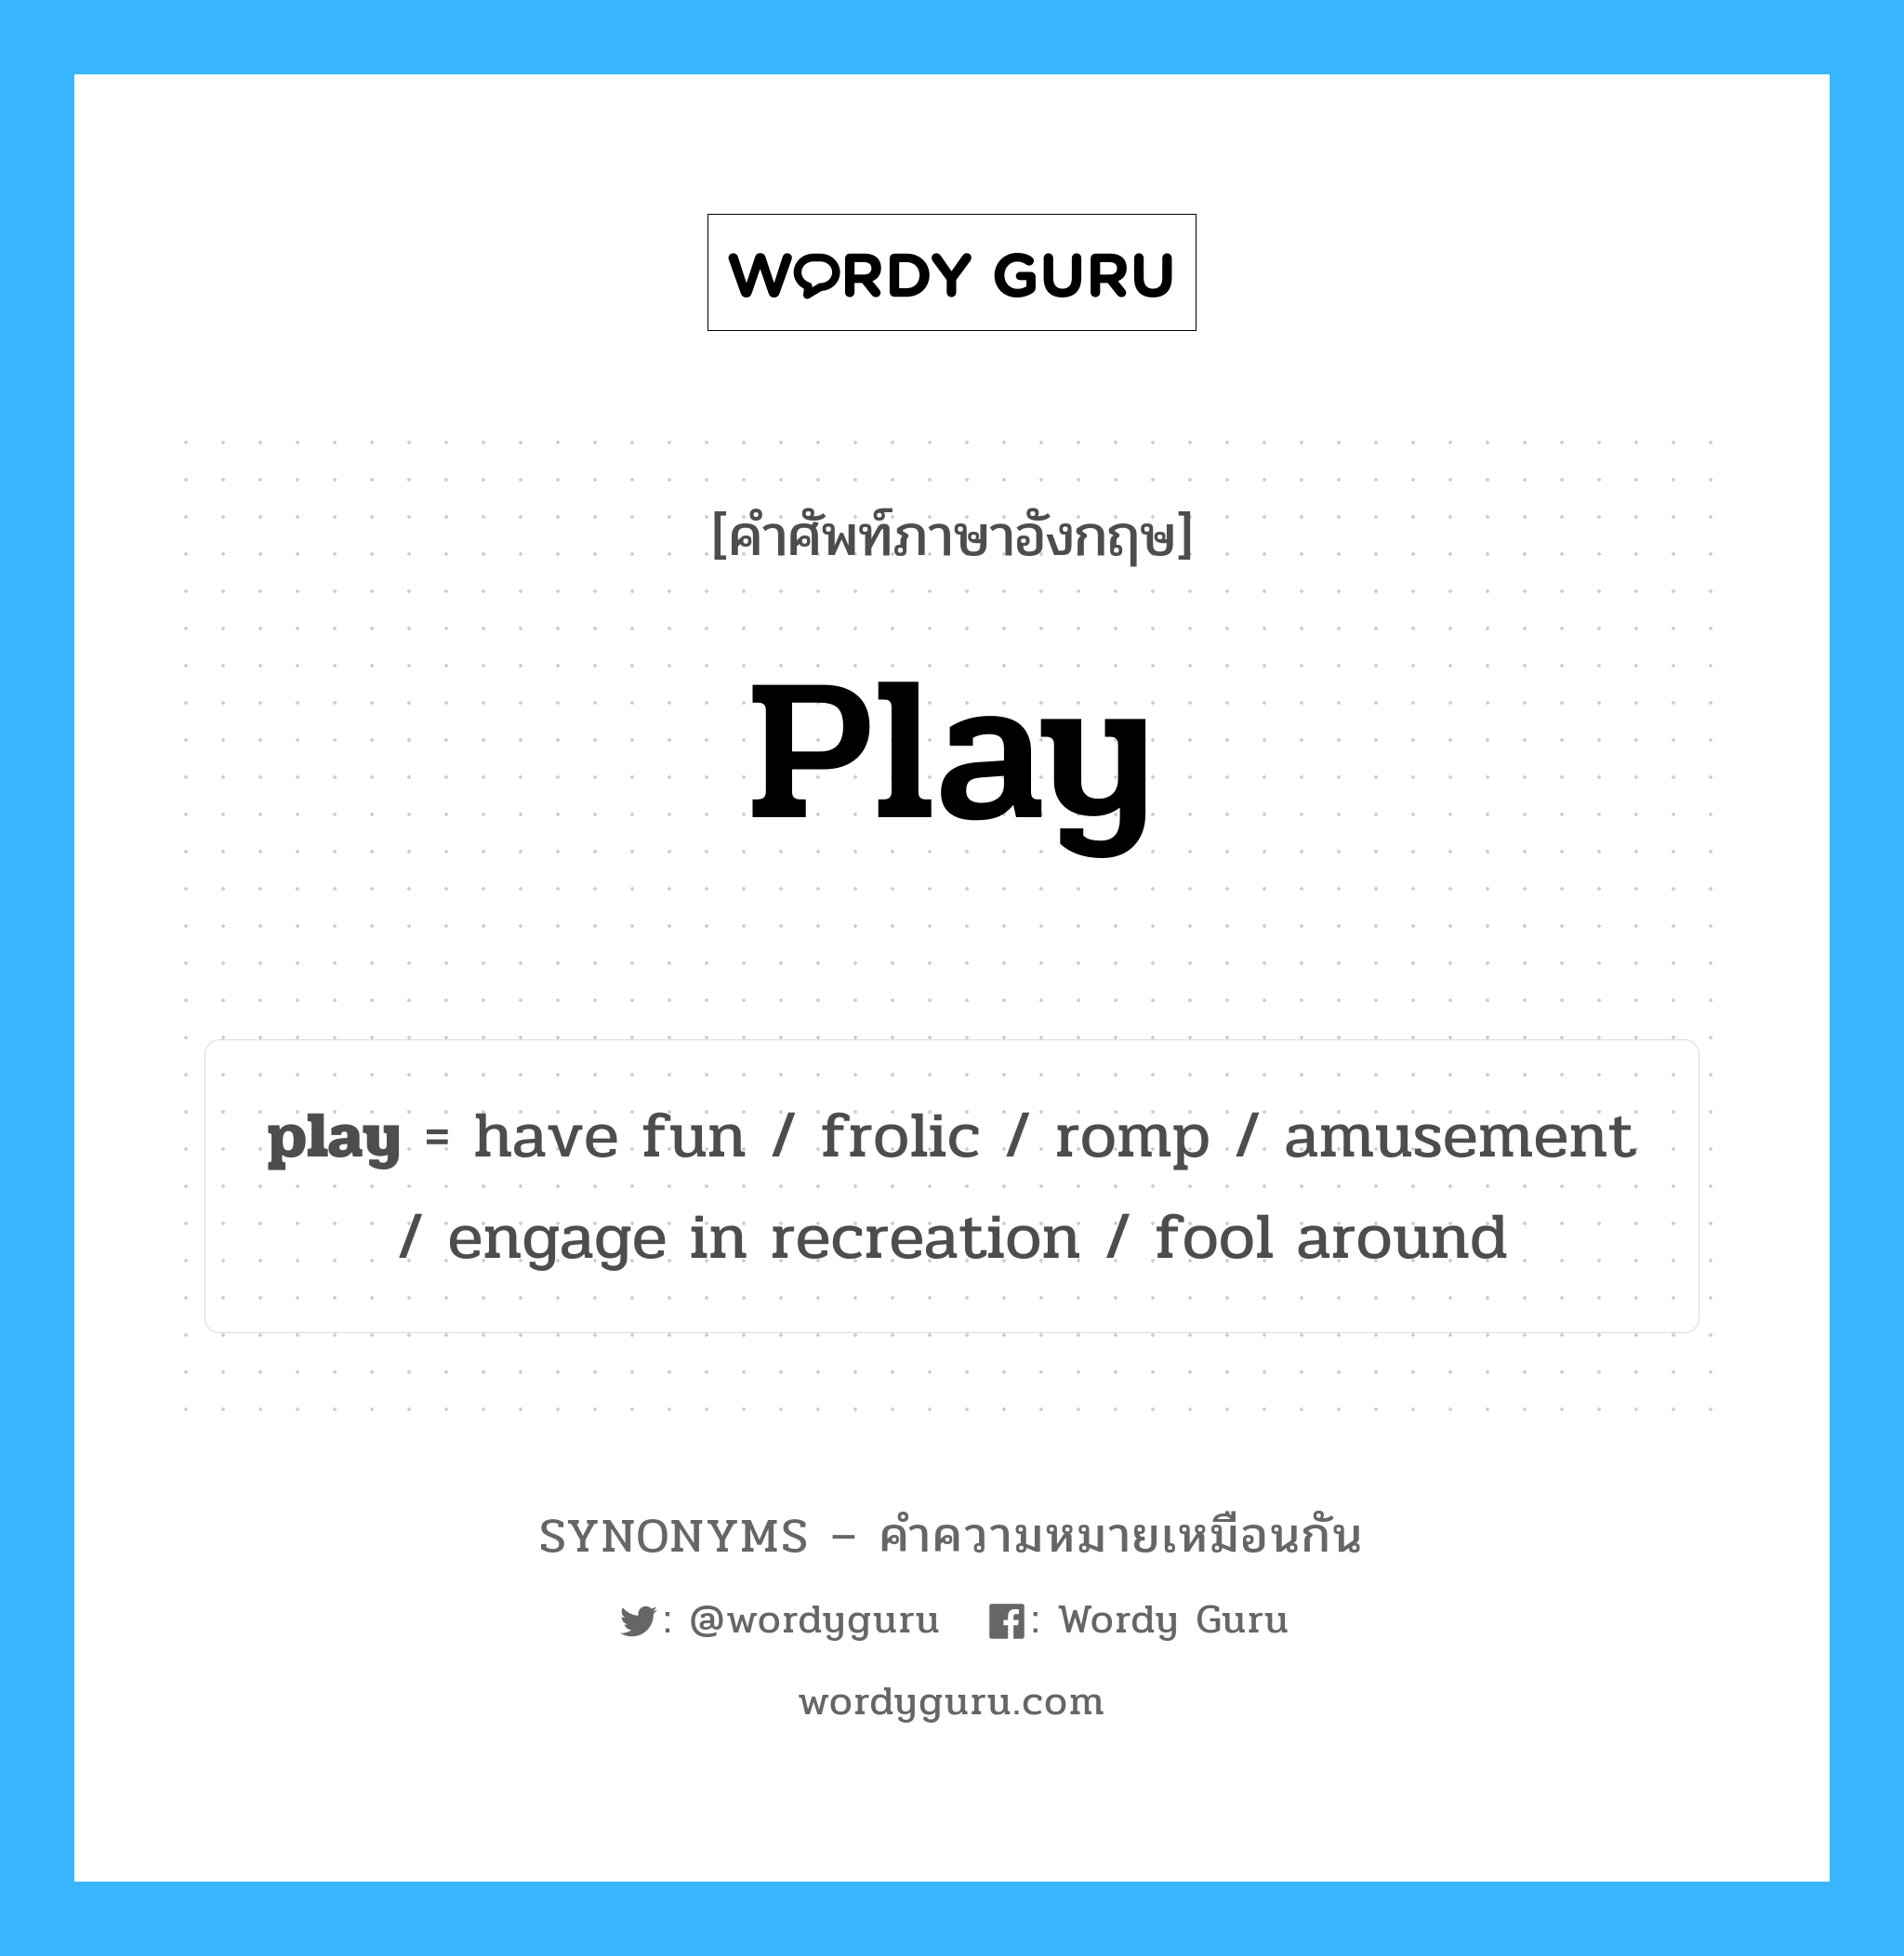 play เป็นหนึ่งใน have fun และมีคำอื่น ๆ อีกดังนี้, คำศัพท์ภาษาอังกฤษ play ความหมายคล้ายกันกับ have fun แปลว่า ขอให้สนุก หมวด have fun